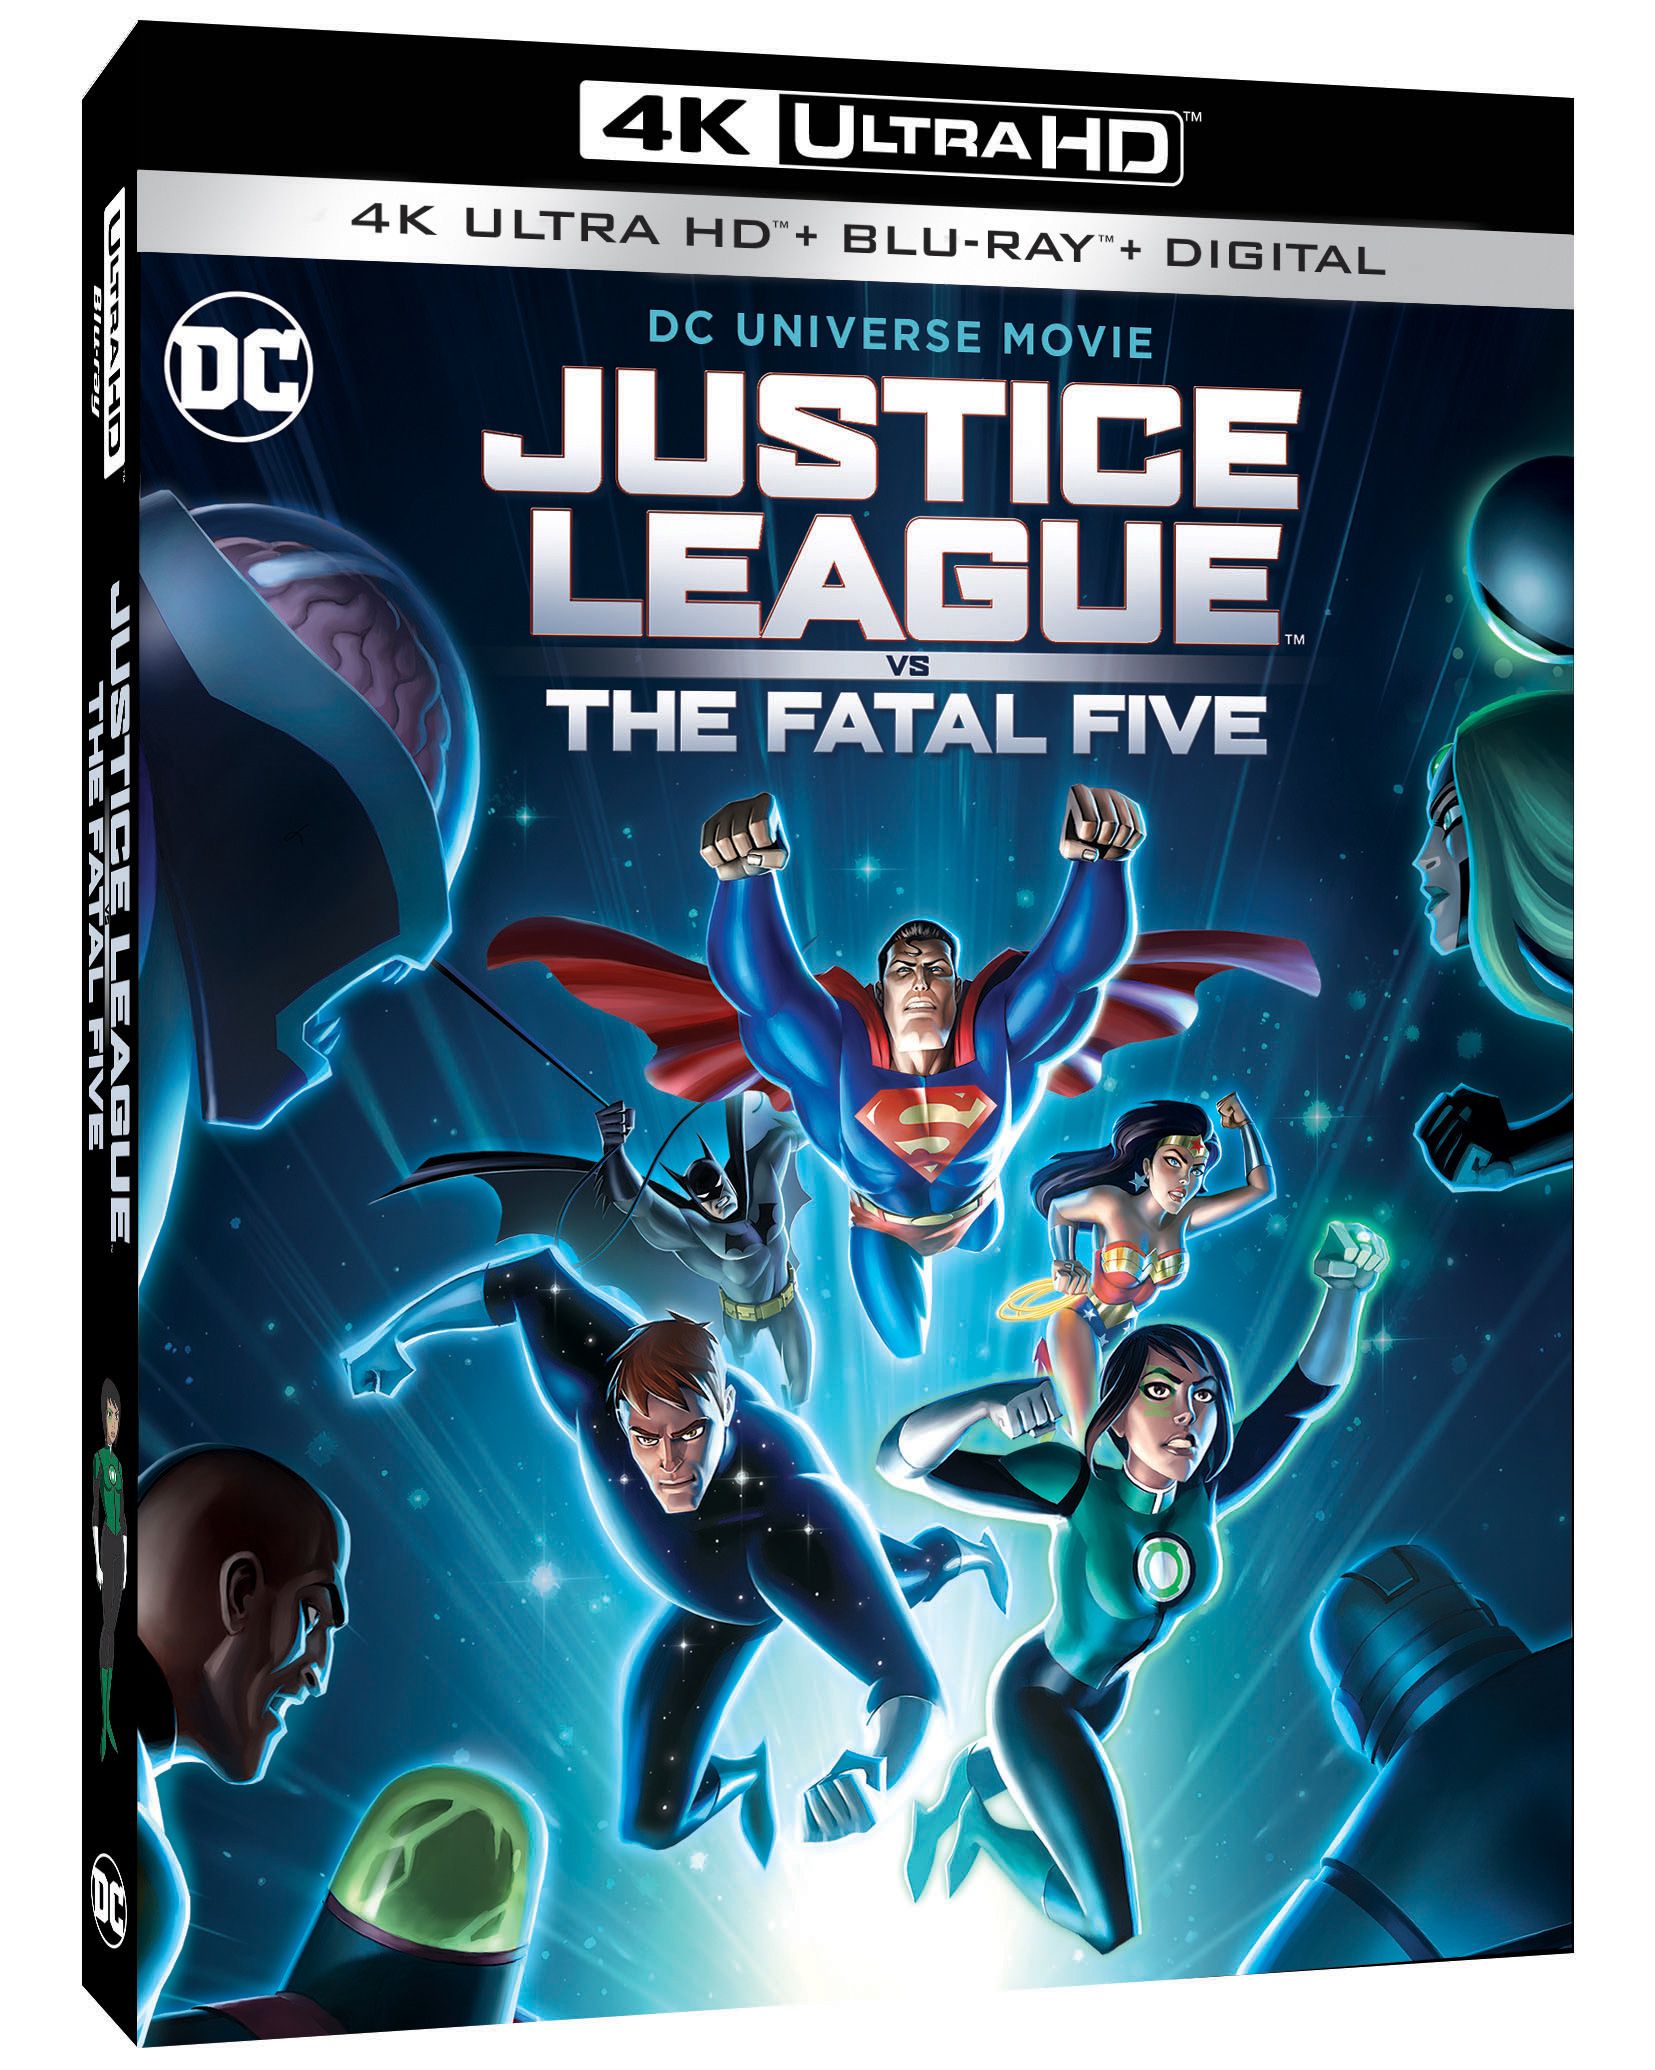 Justice League Vs. the Fatal Five 4K Ultra HD cover art